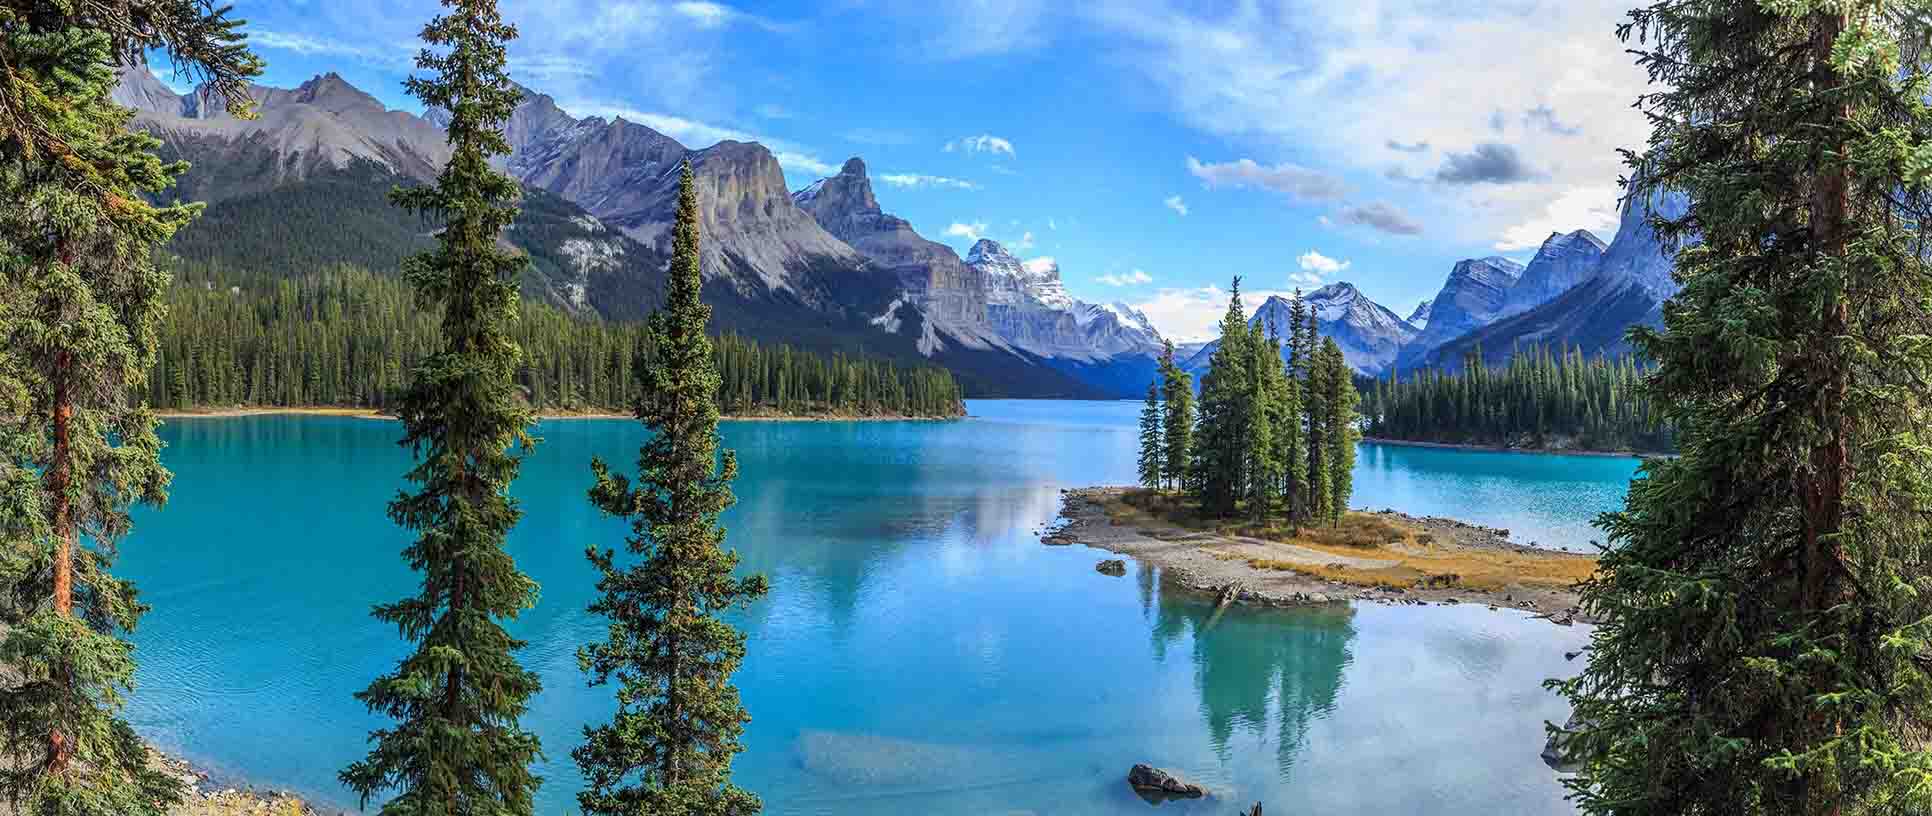 Serene Canadian Lake reflecting the breathtaking beauty of nature.